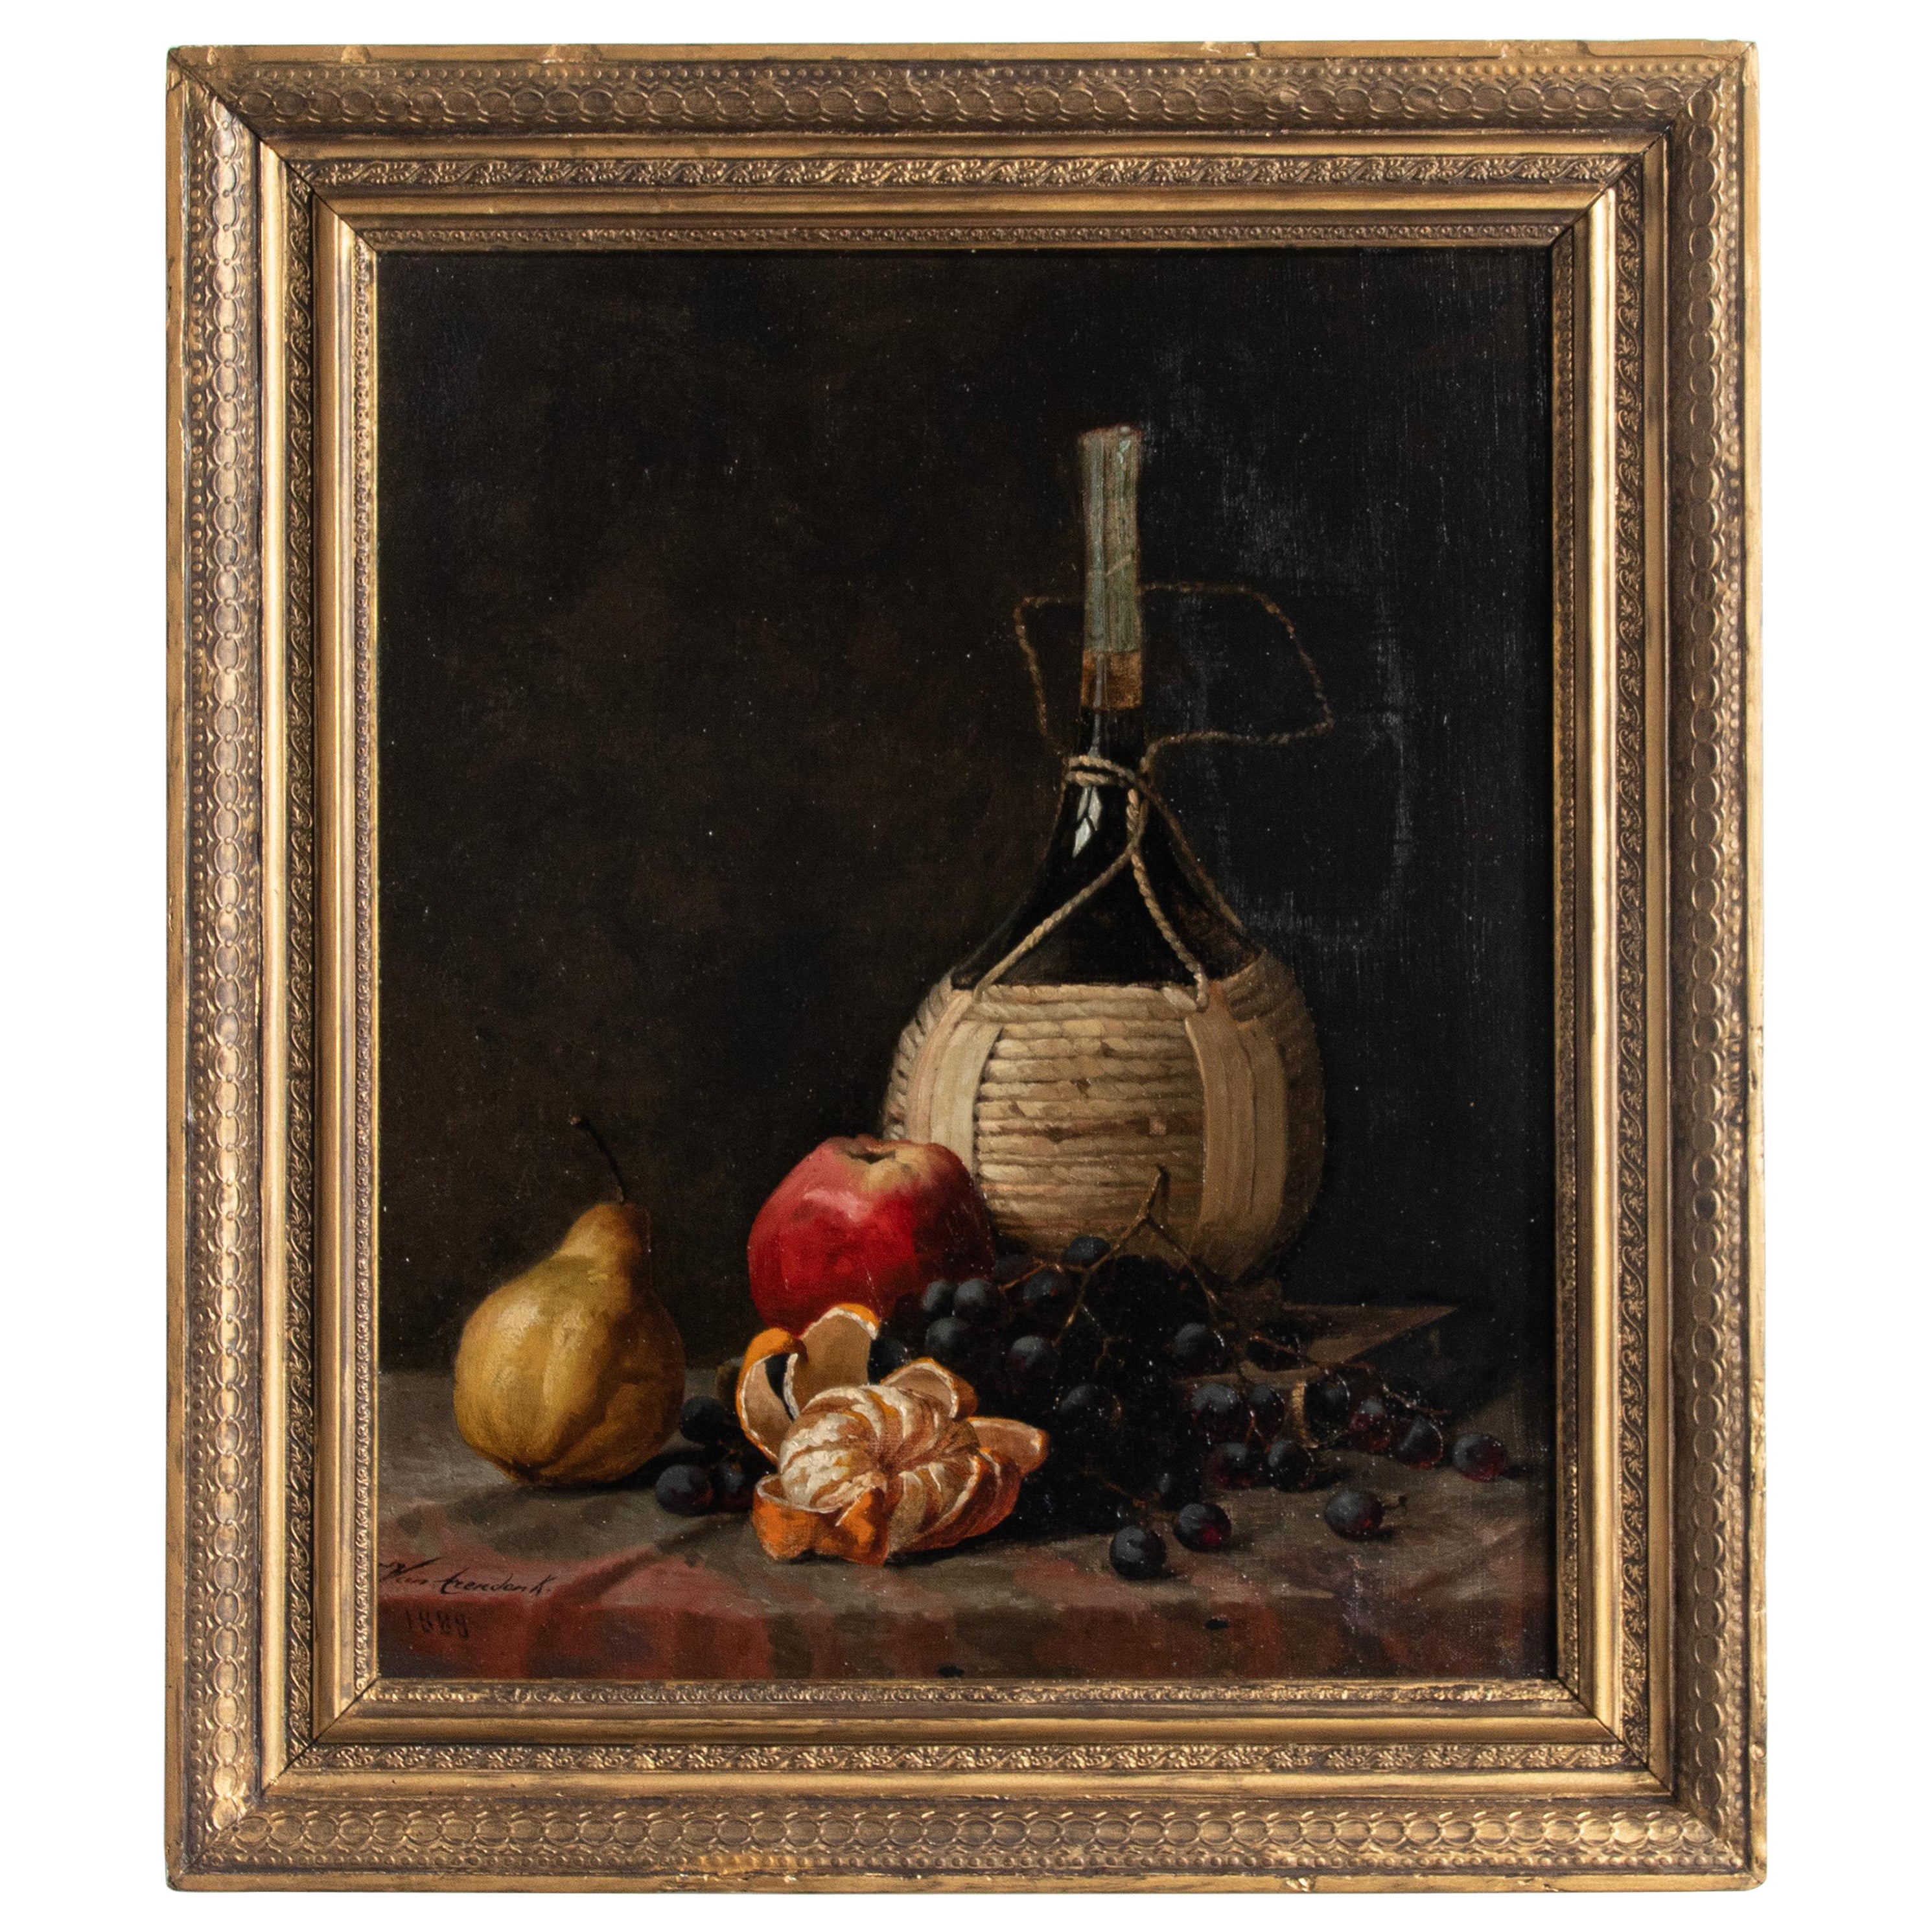 Nature morte de fruits de la fin du XIXe siècle, peinture à l'huile de Van Arendonk